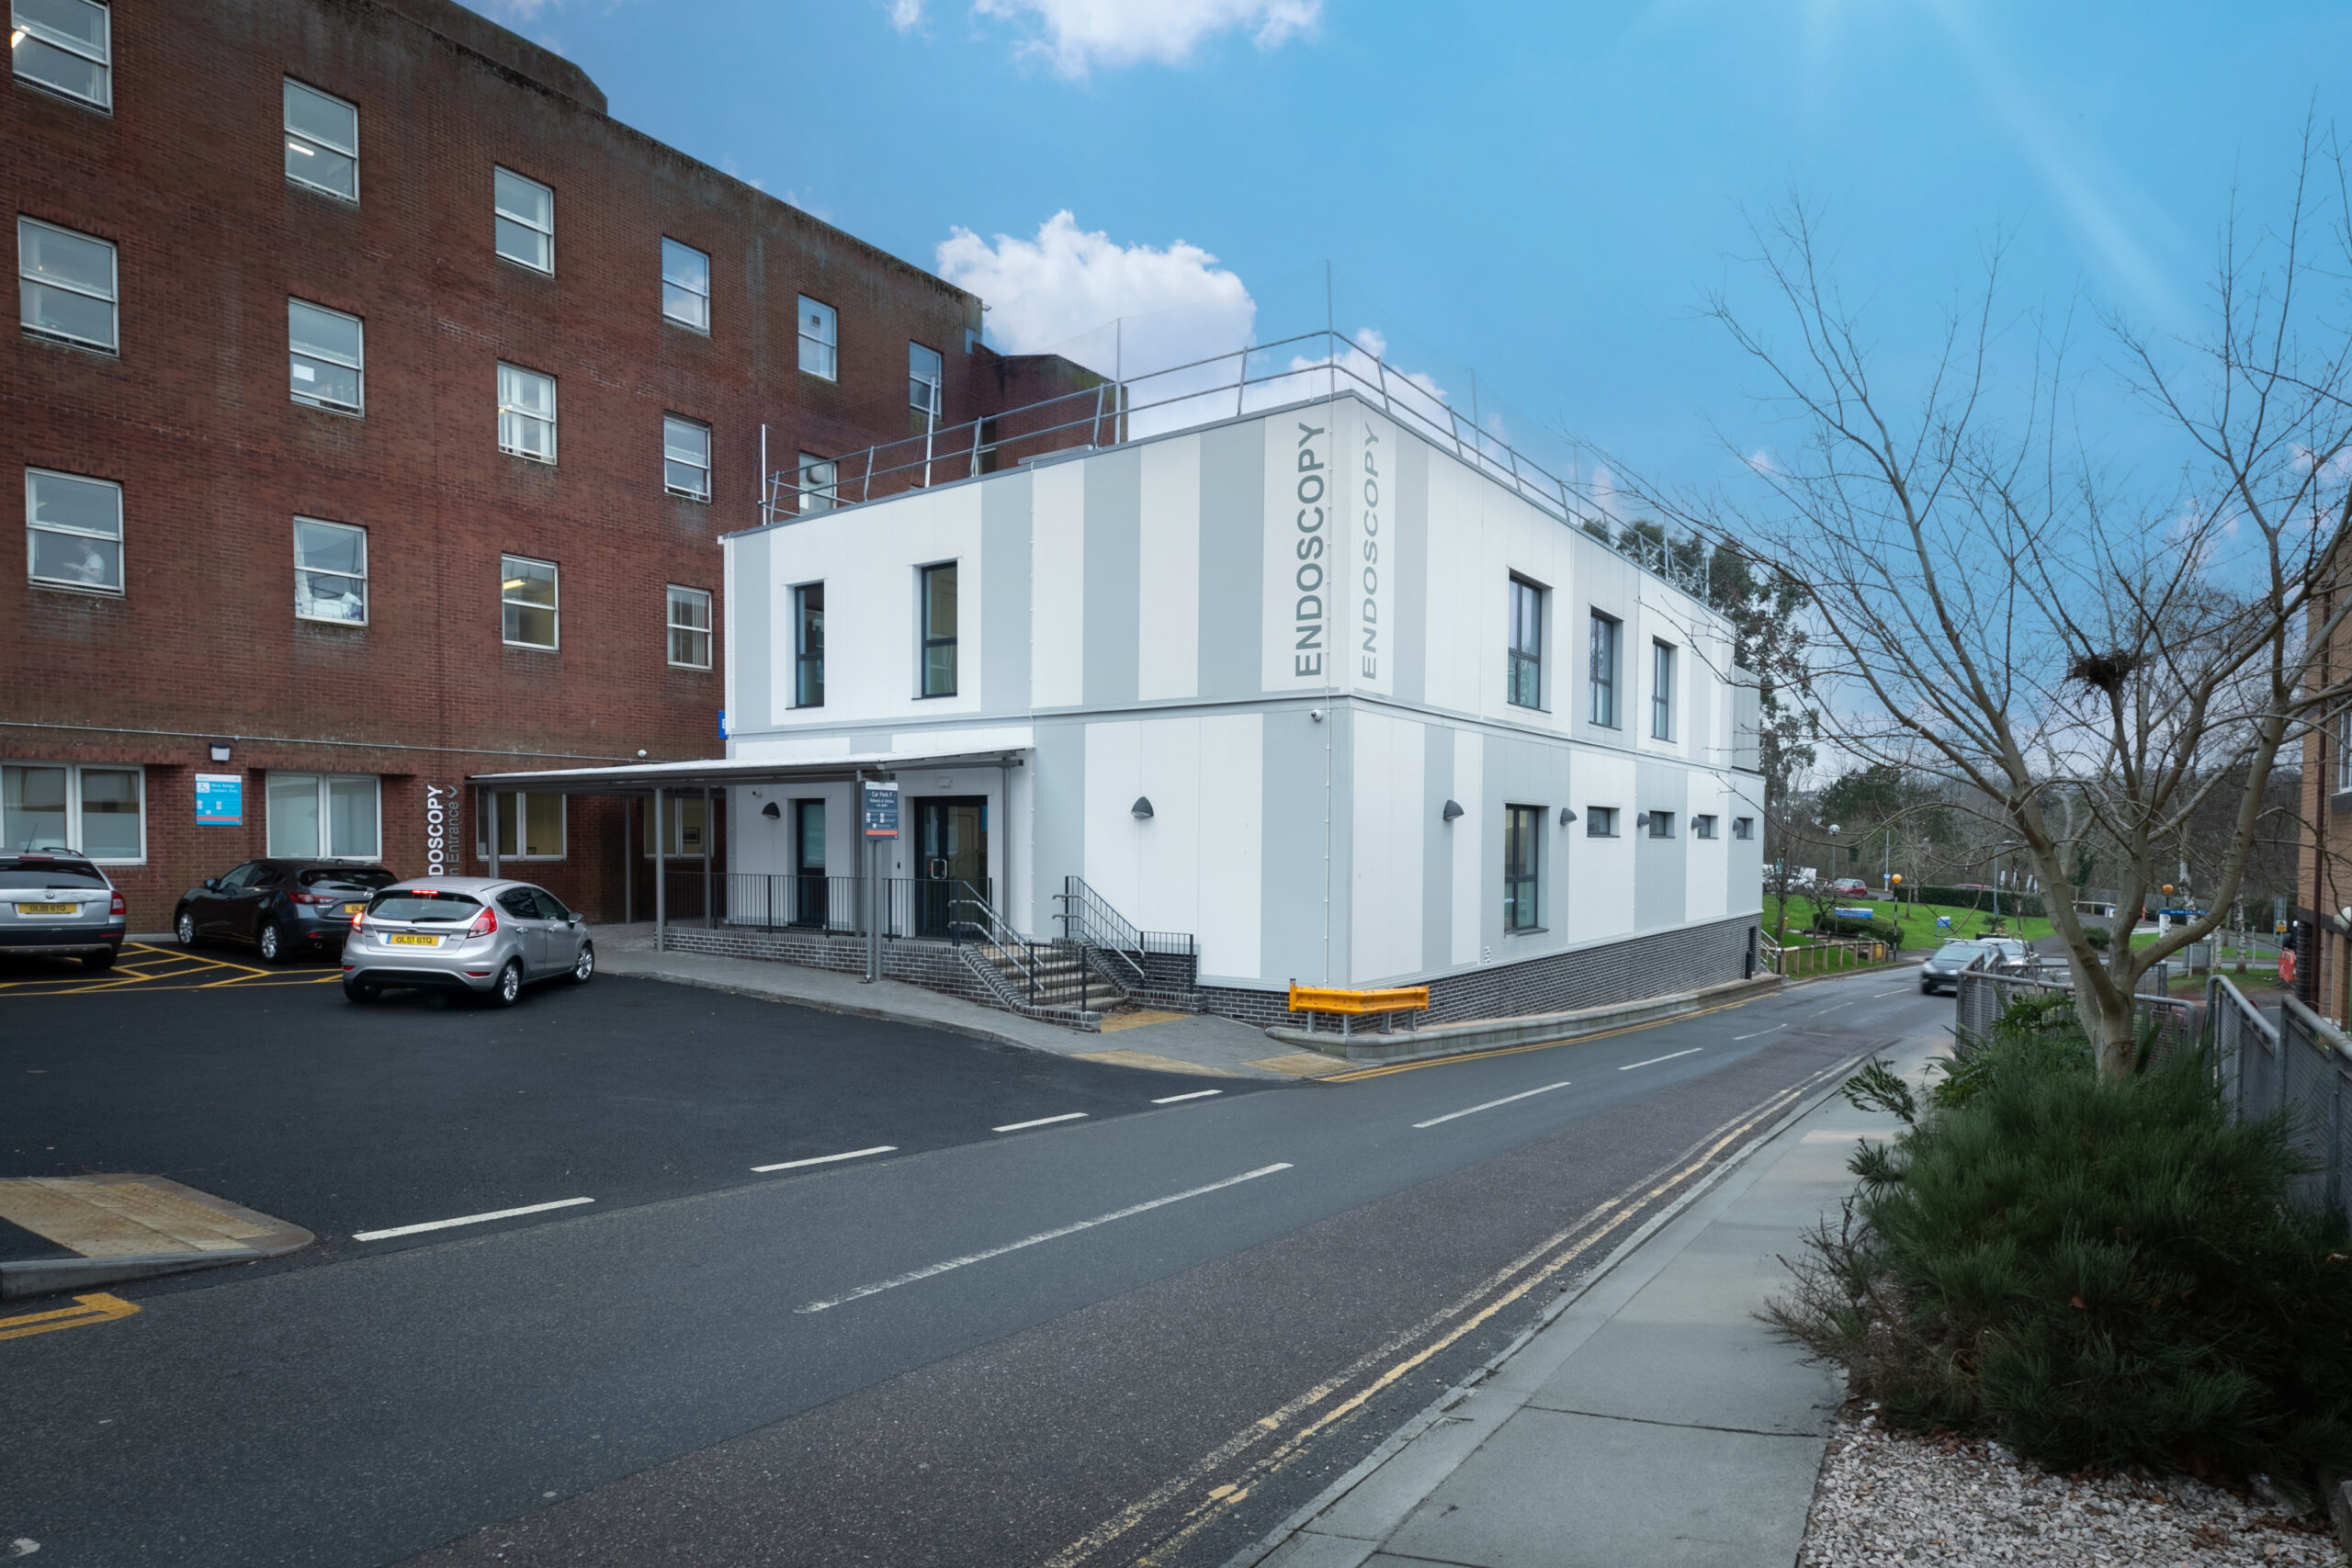 Endoscopy Facility and Training Centre at Torbay Hospital – Devon, United Kingdom